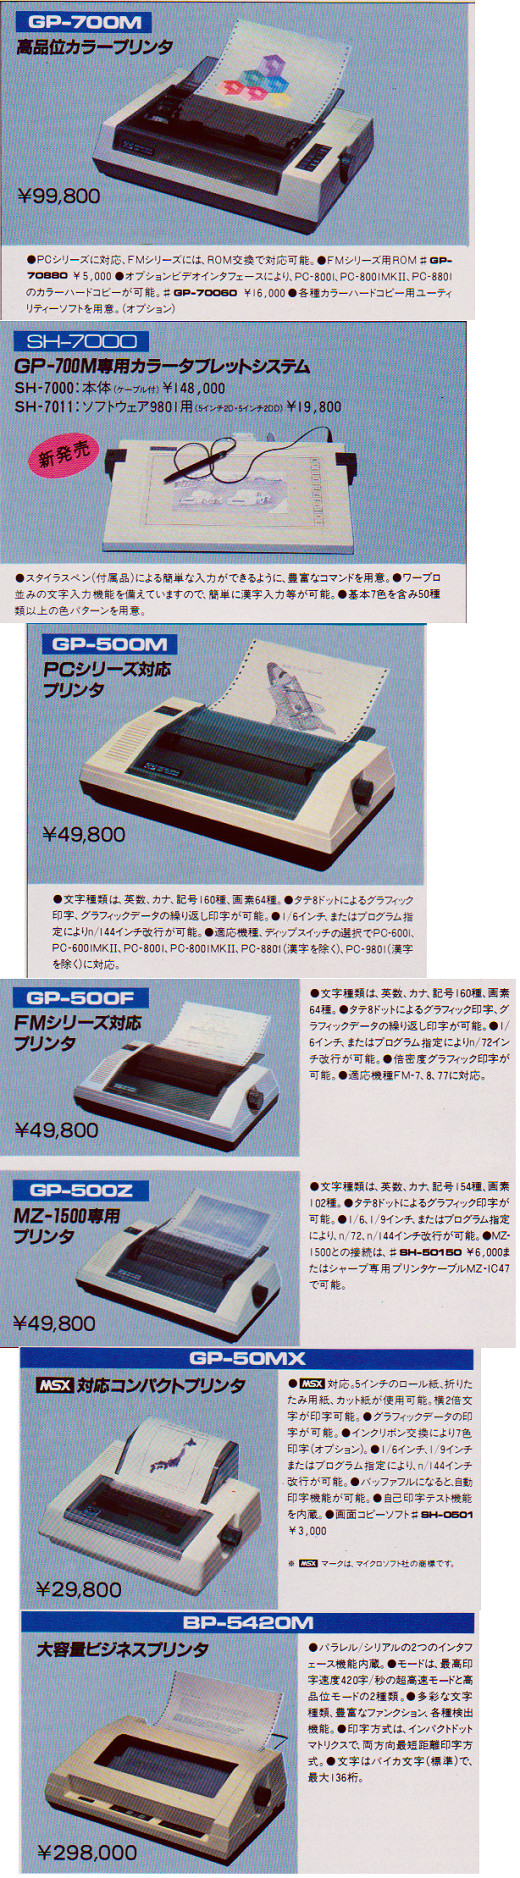 ASCII1985(02)e09GP-700M_W520.JPG